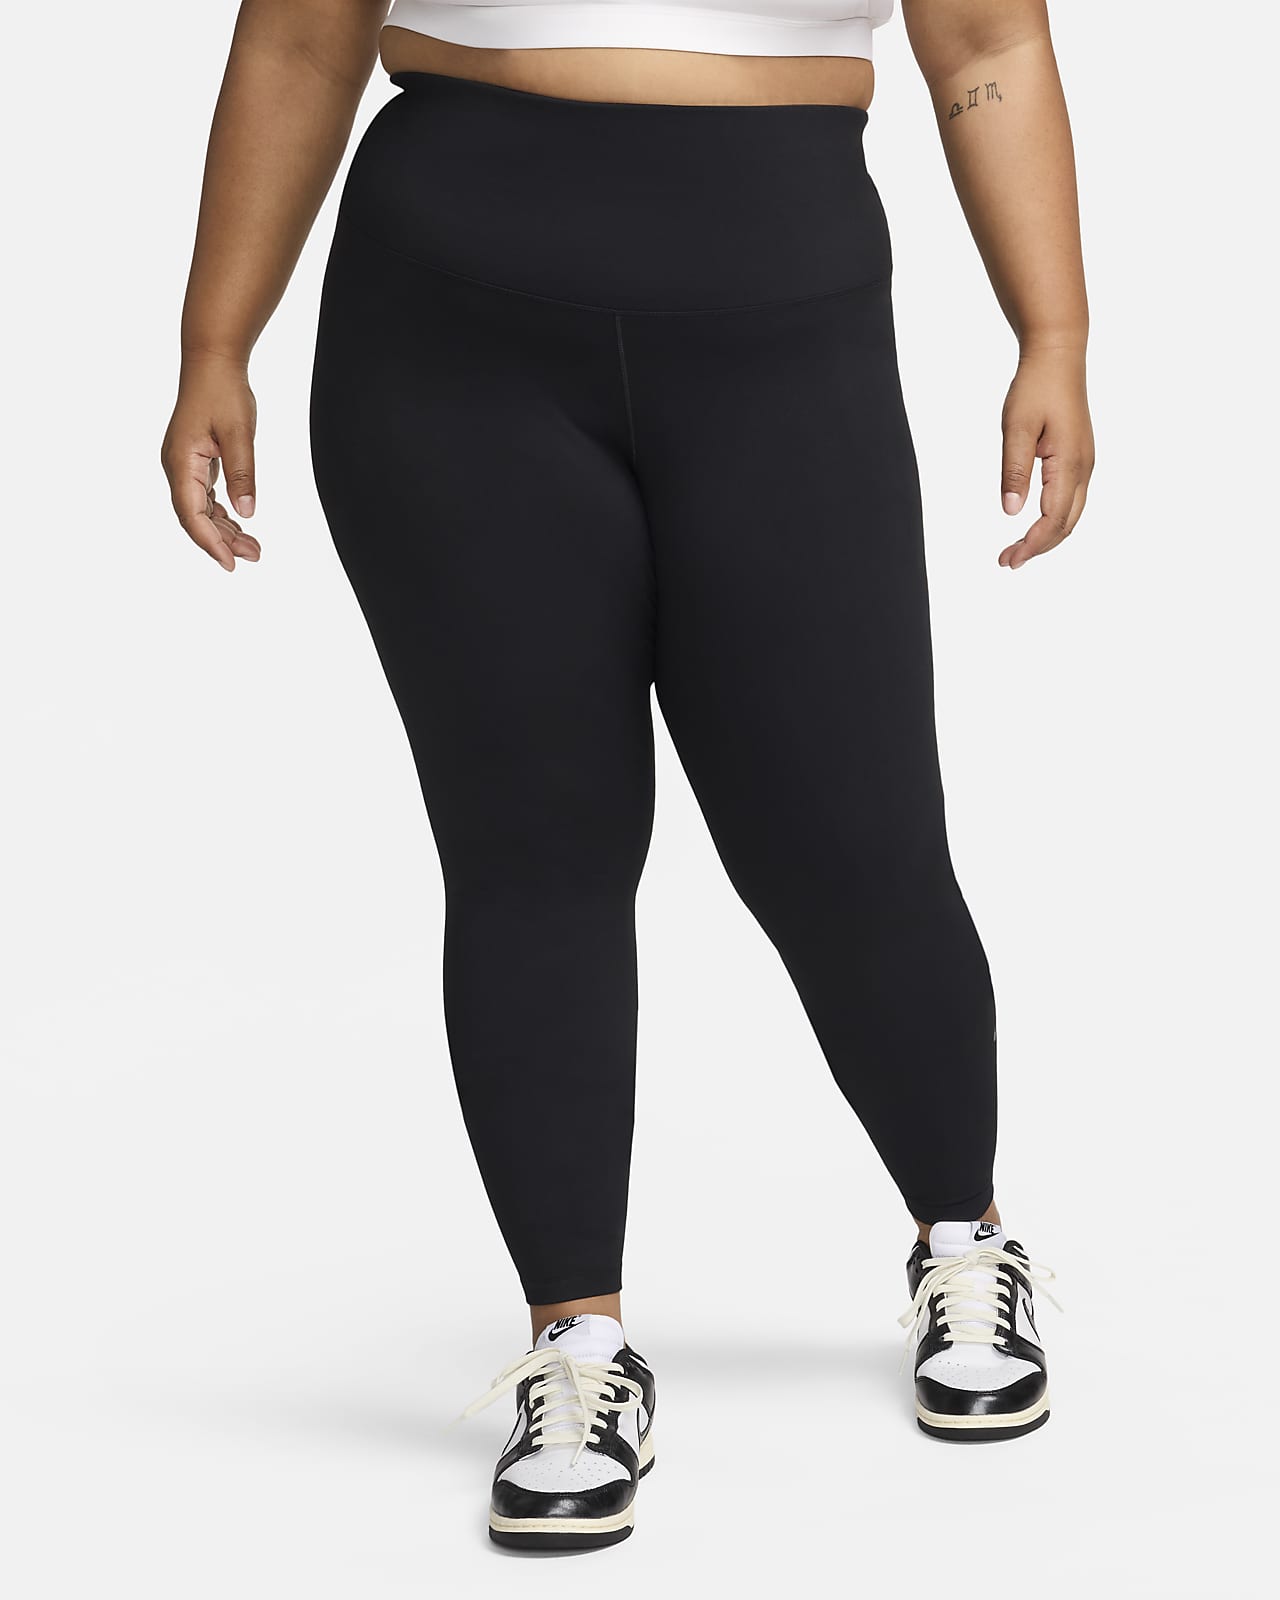 Nike One Leggings de talle alto y longitud completa (Talla grande) - Mujer